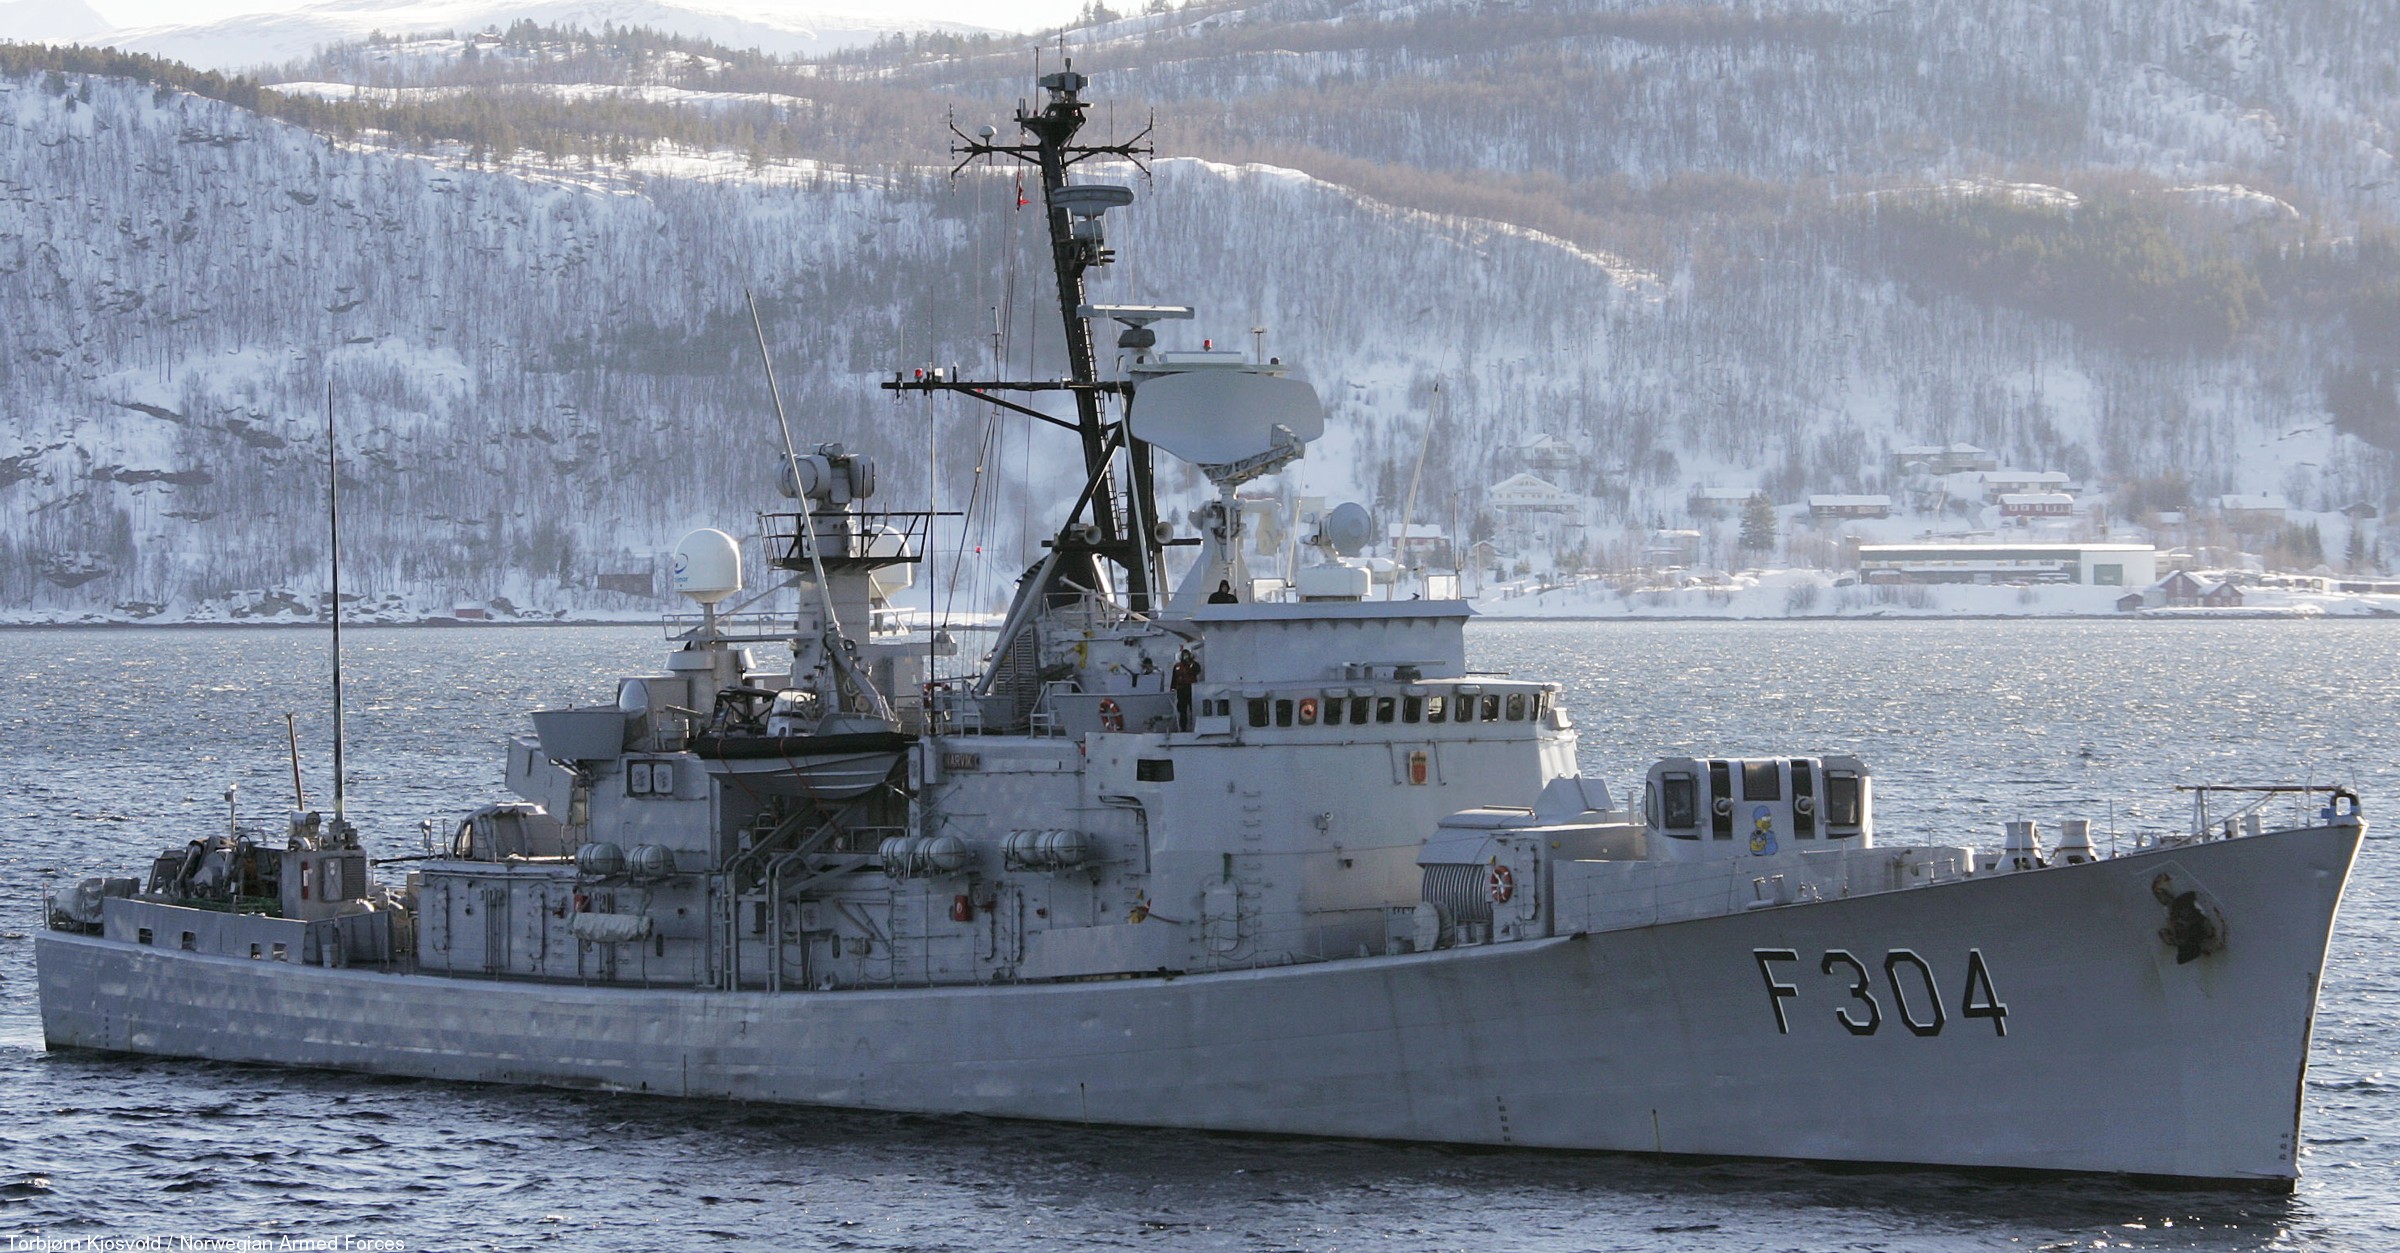 f-304 hnoms narvik knm oslo class frigate royal norwegian navy sjoforsvaret 07x navy yard karljohansvern